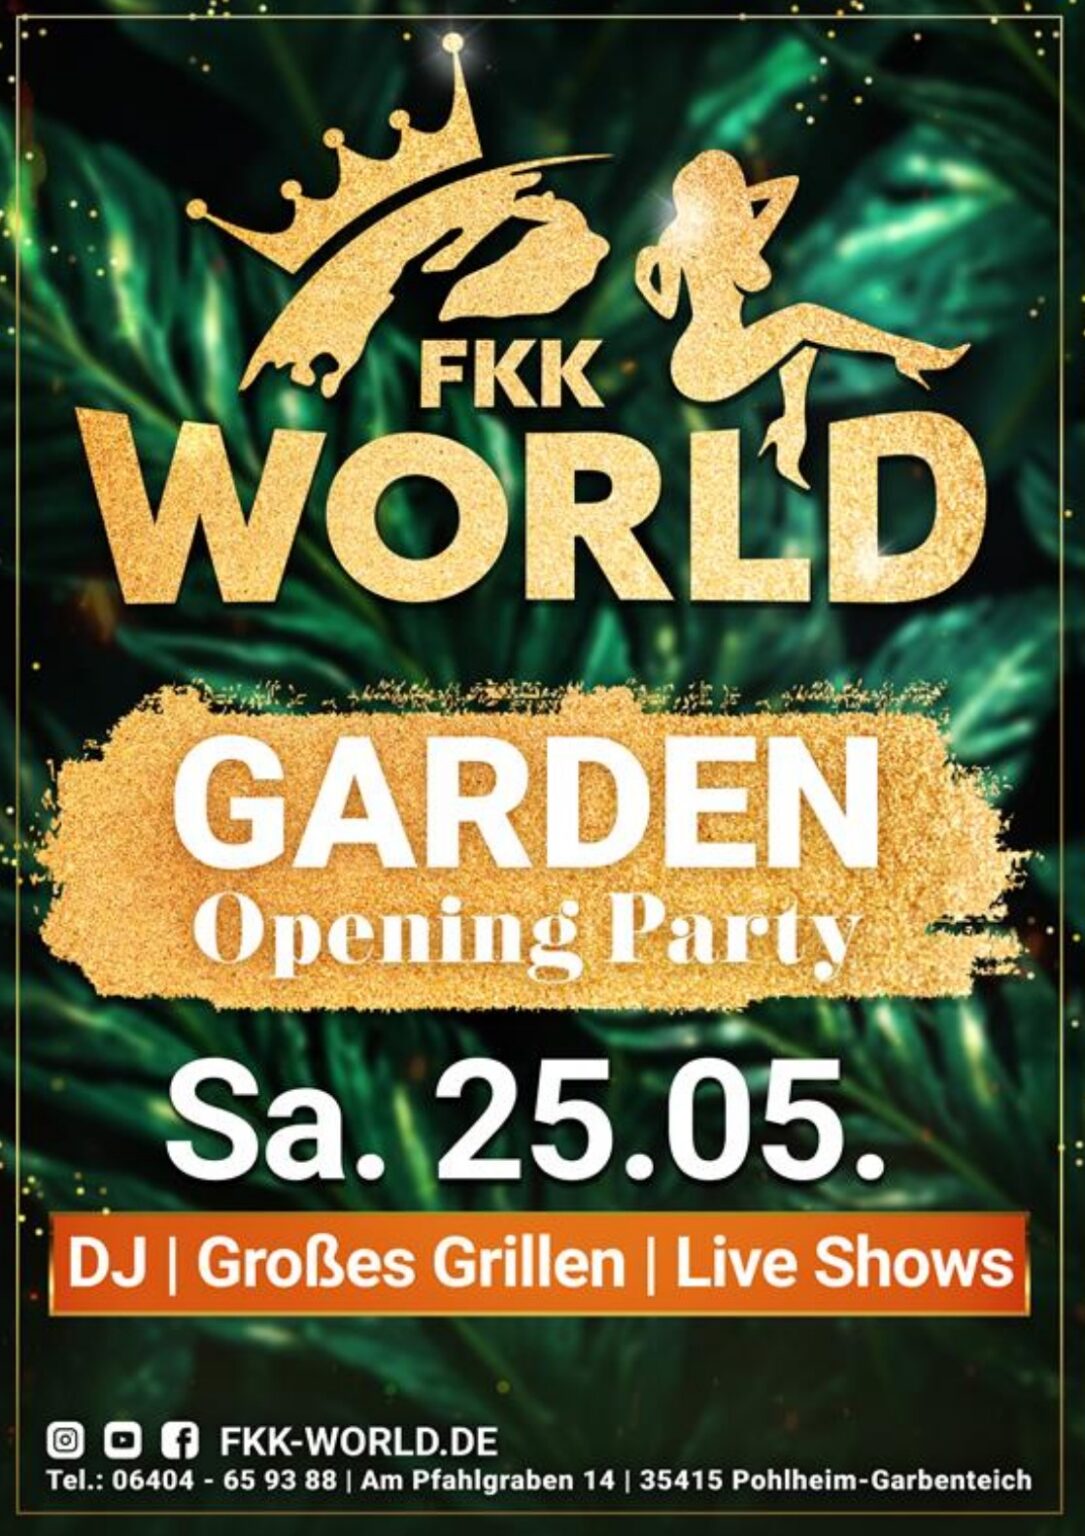 [Bild: Garden-Opening-Party-1085x1536.jpg]